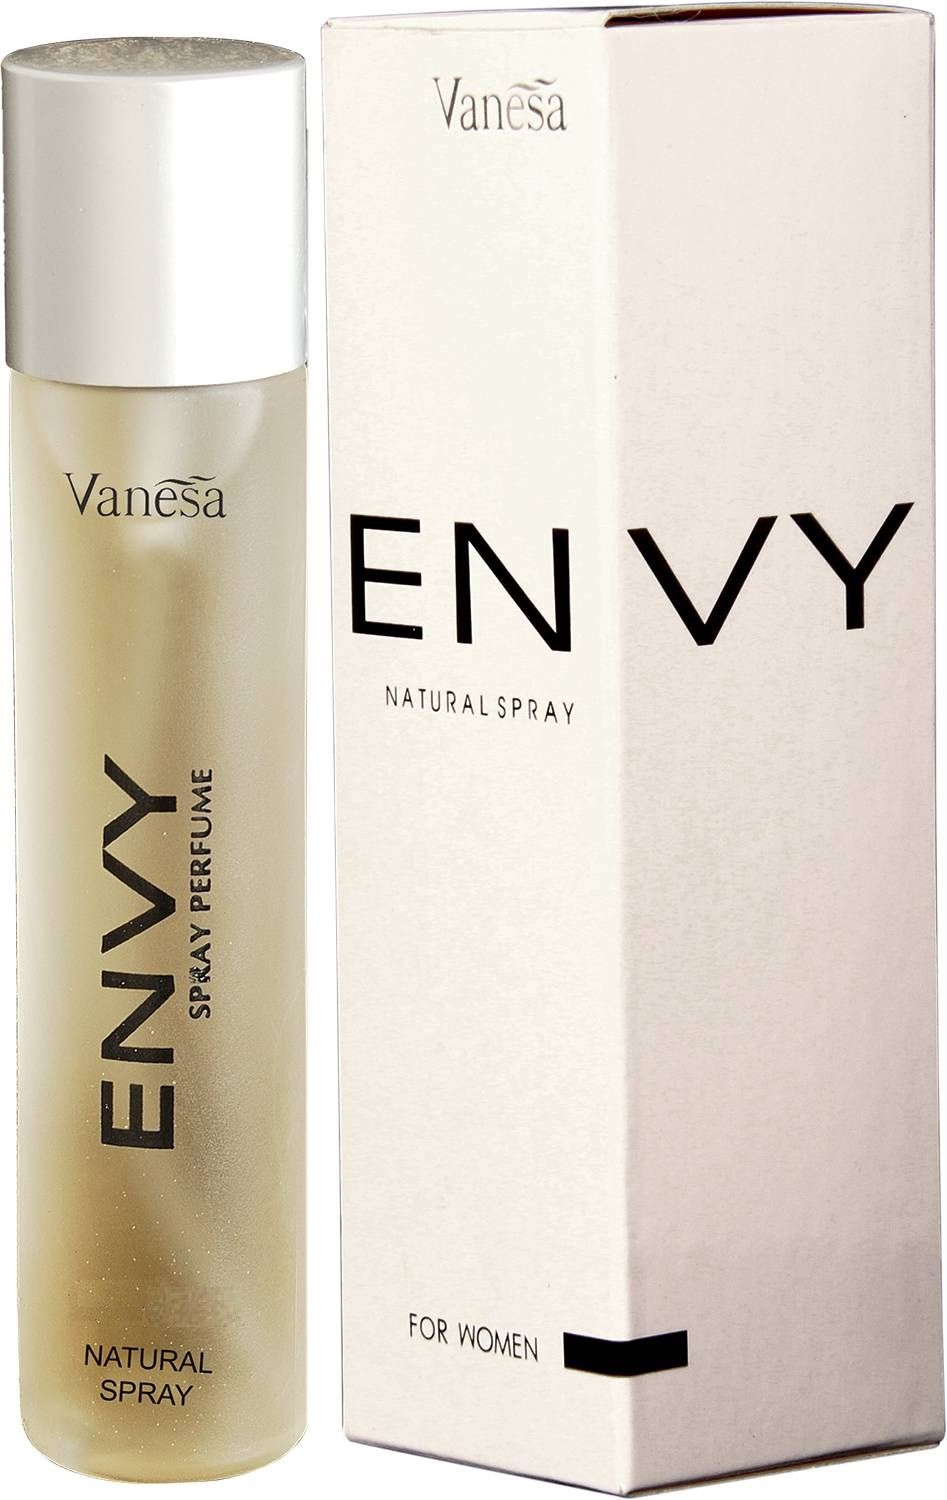 Envy Natural Spray for Women Perfume 